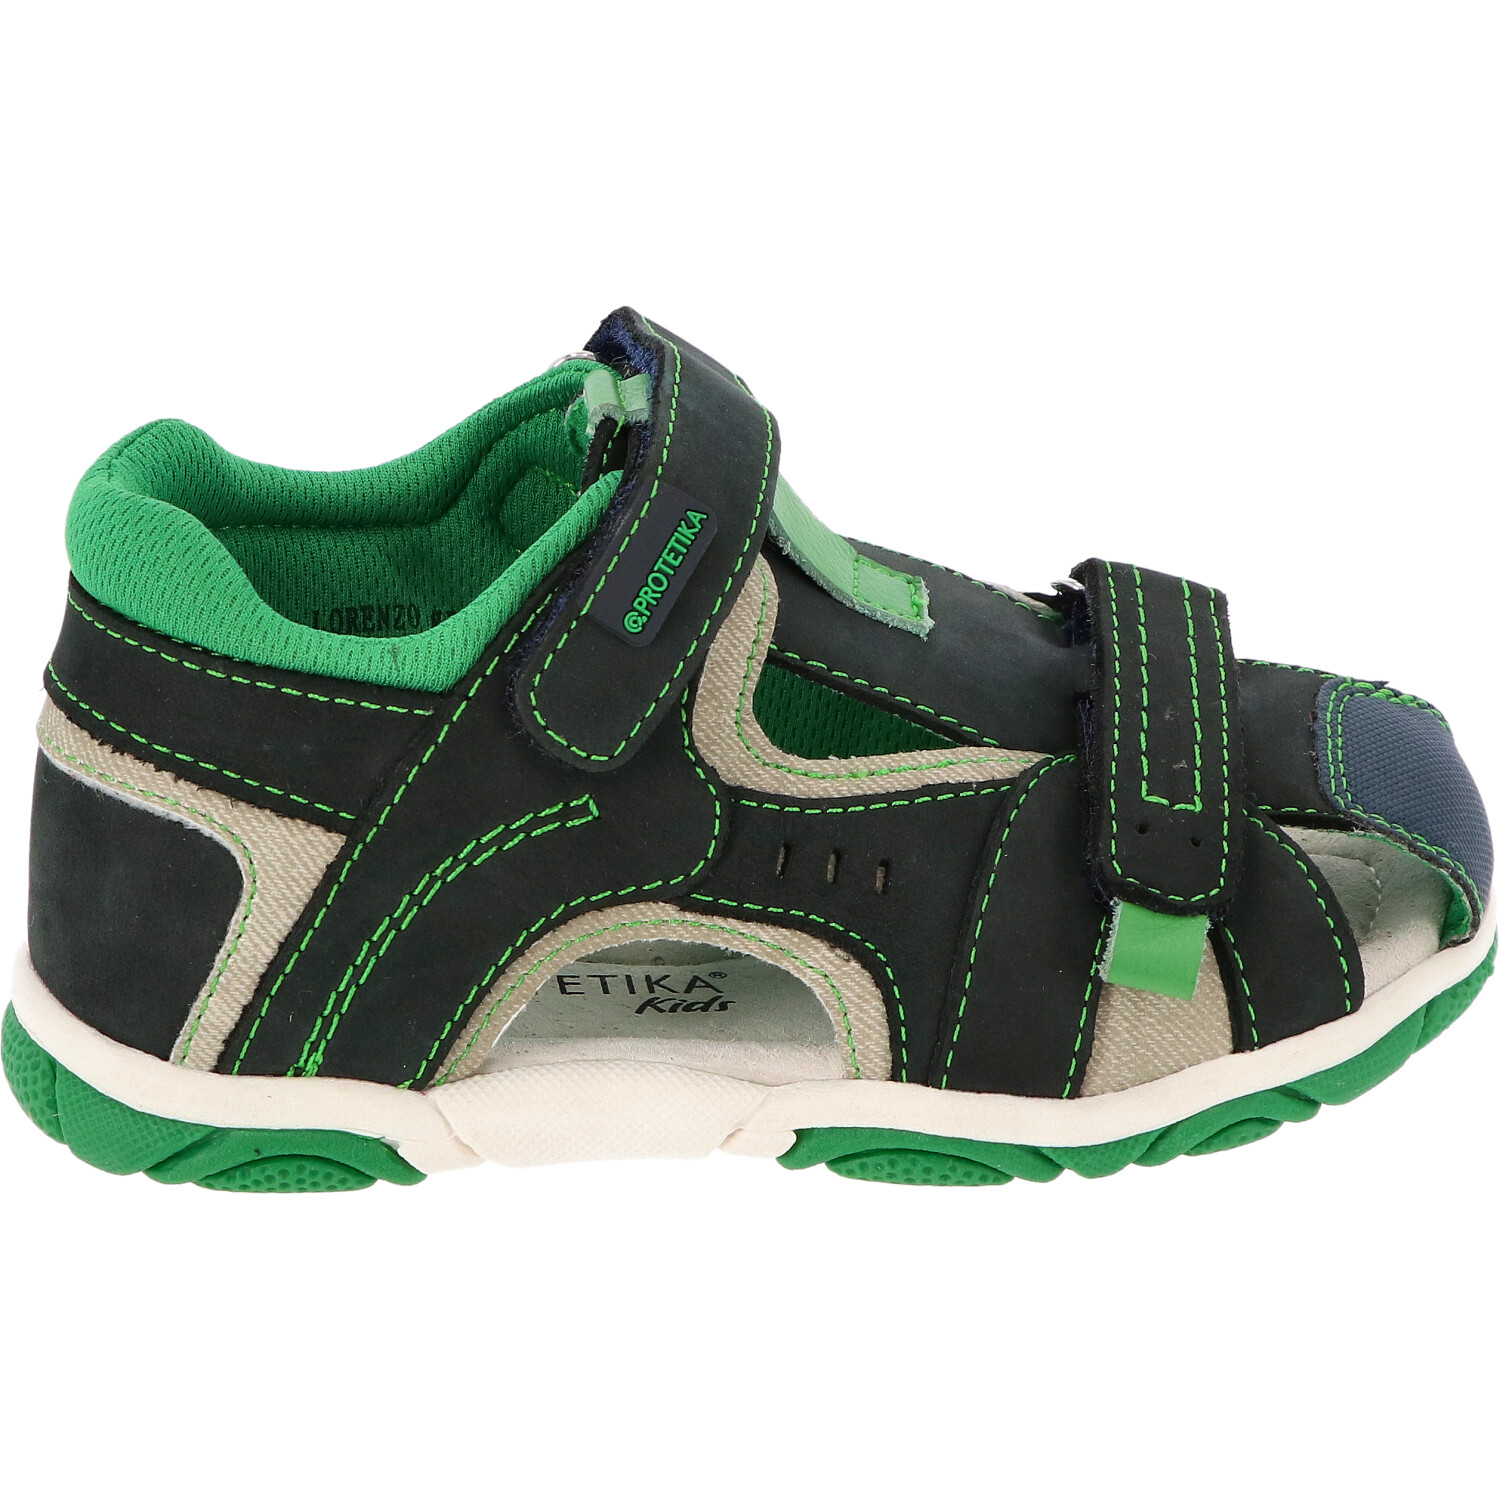 Protetika - sandále LORENZO green